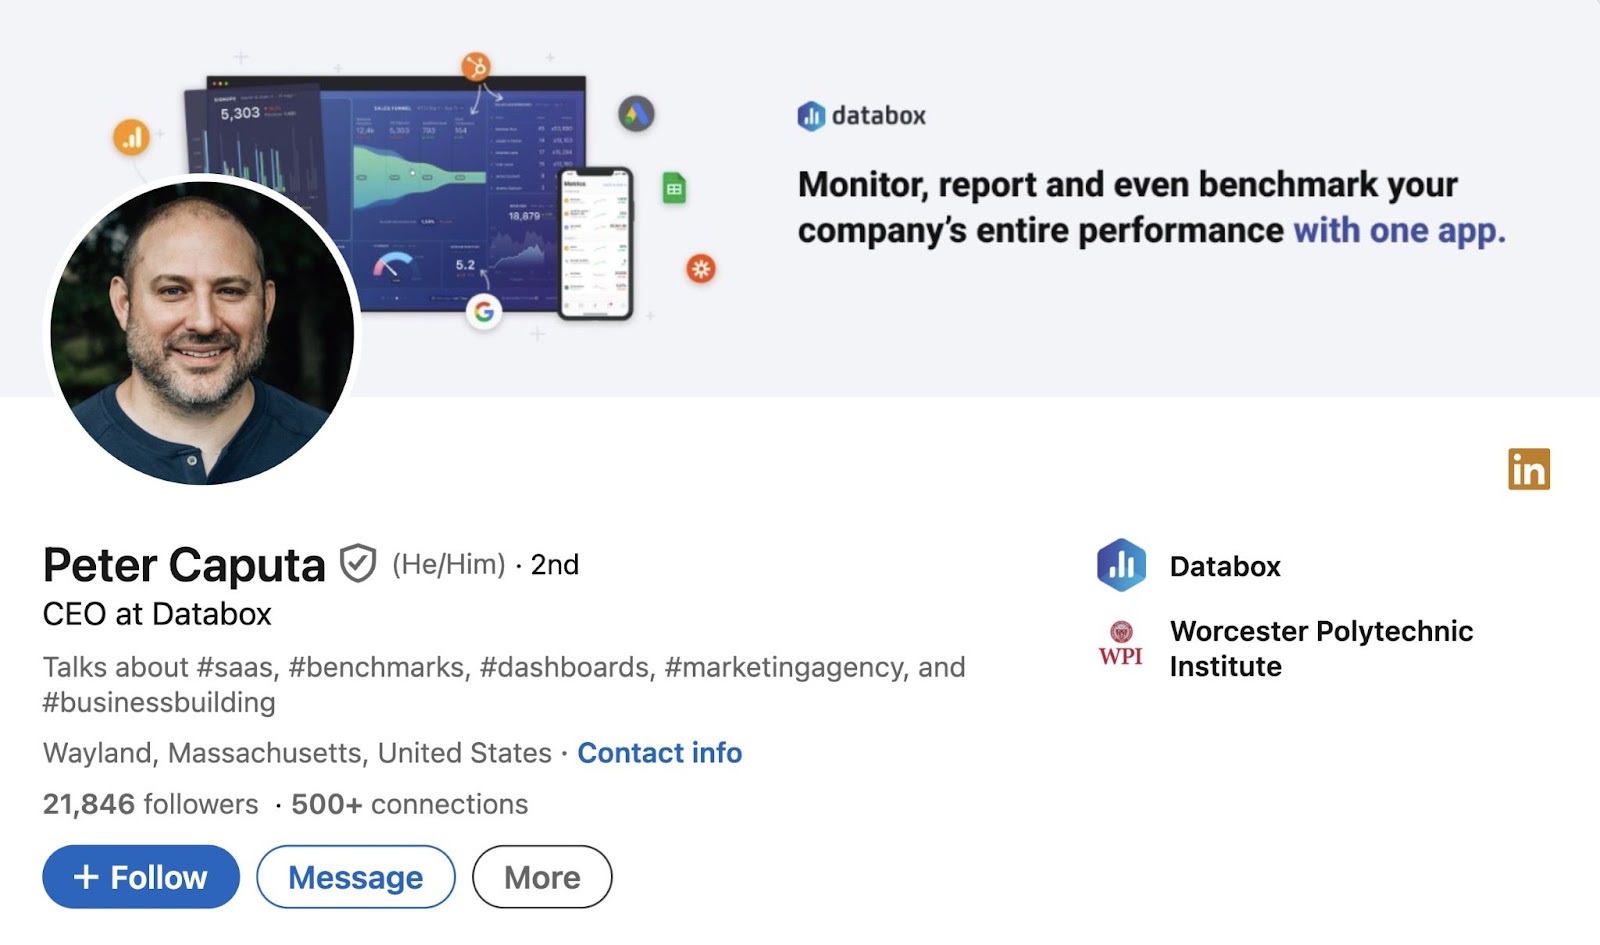 Databox CEO Peter Caputa's LinkedIn profile